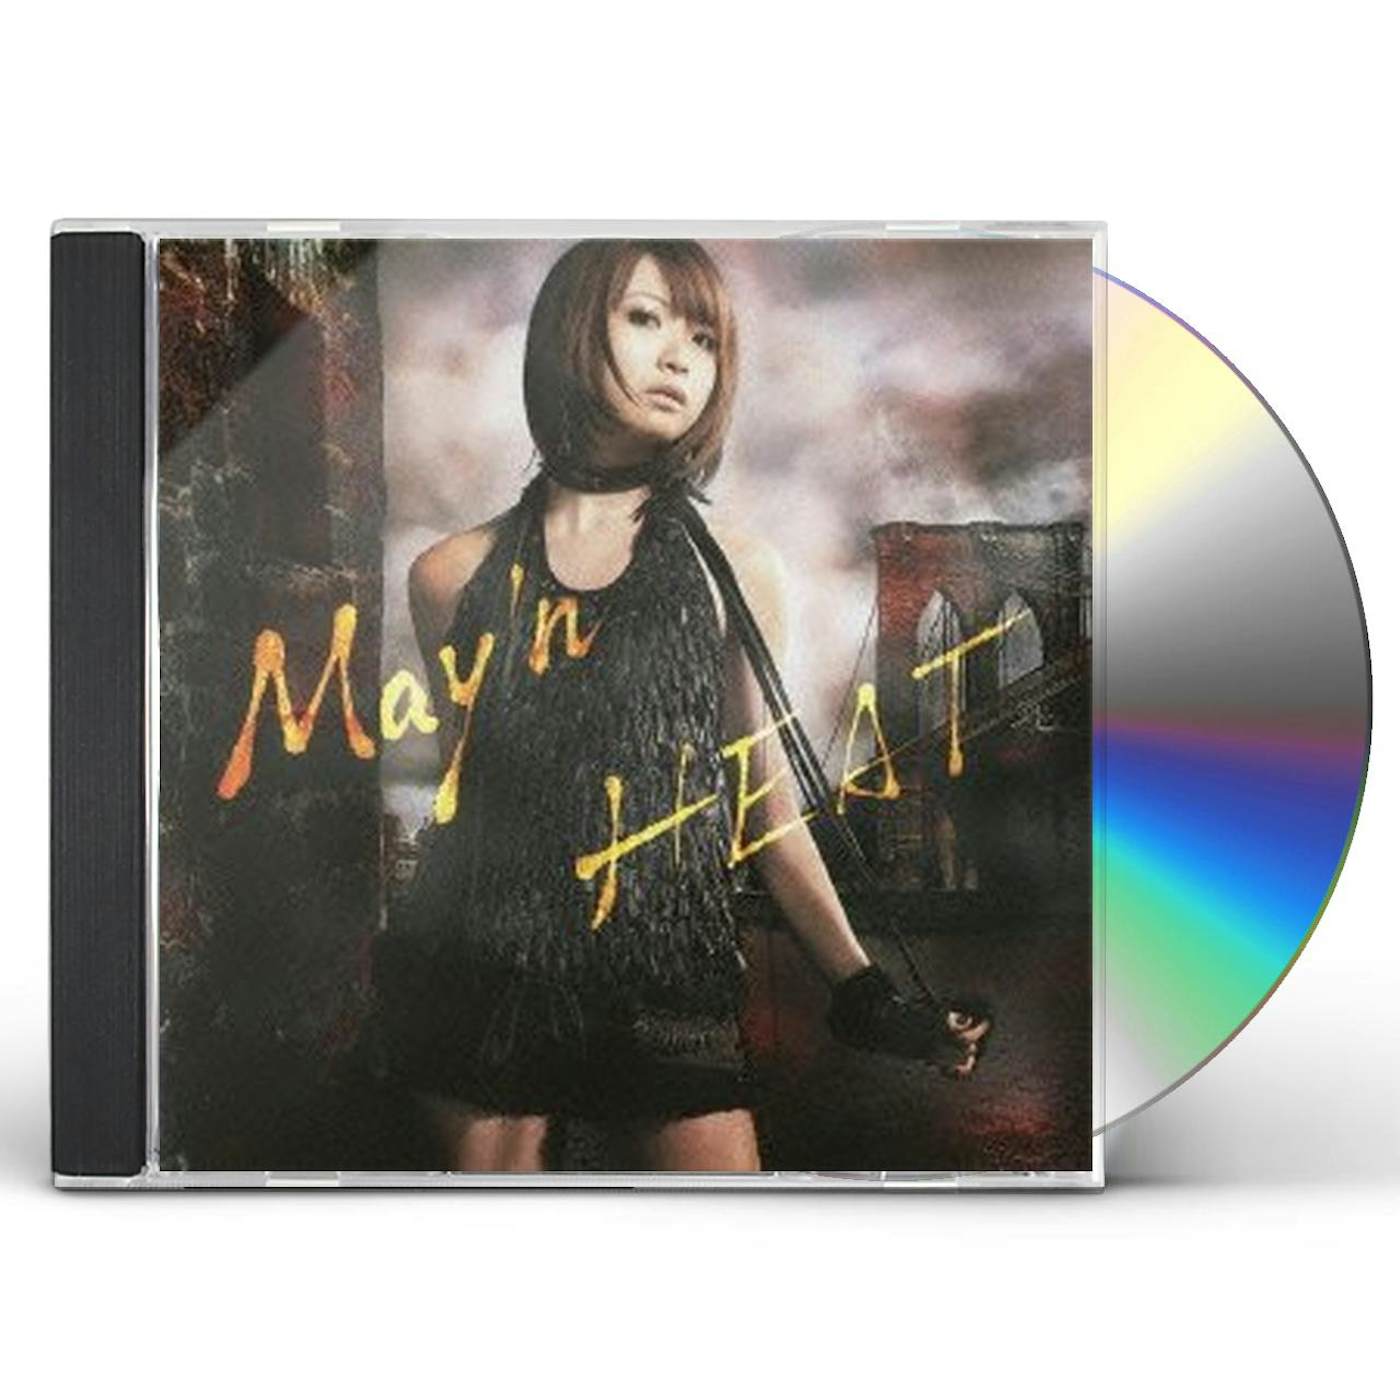 May'n HEAT CD